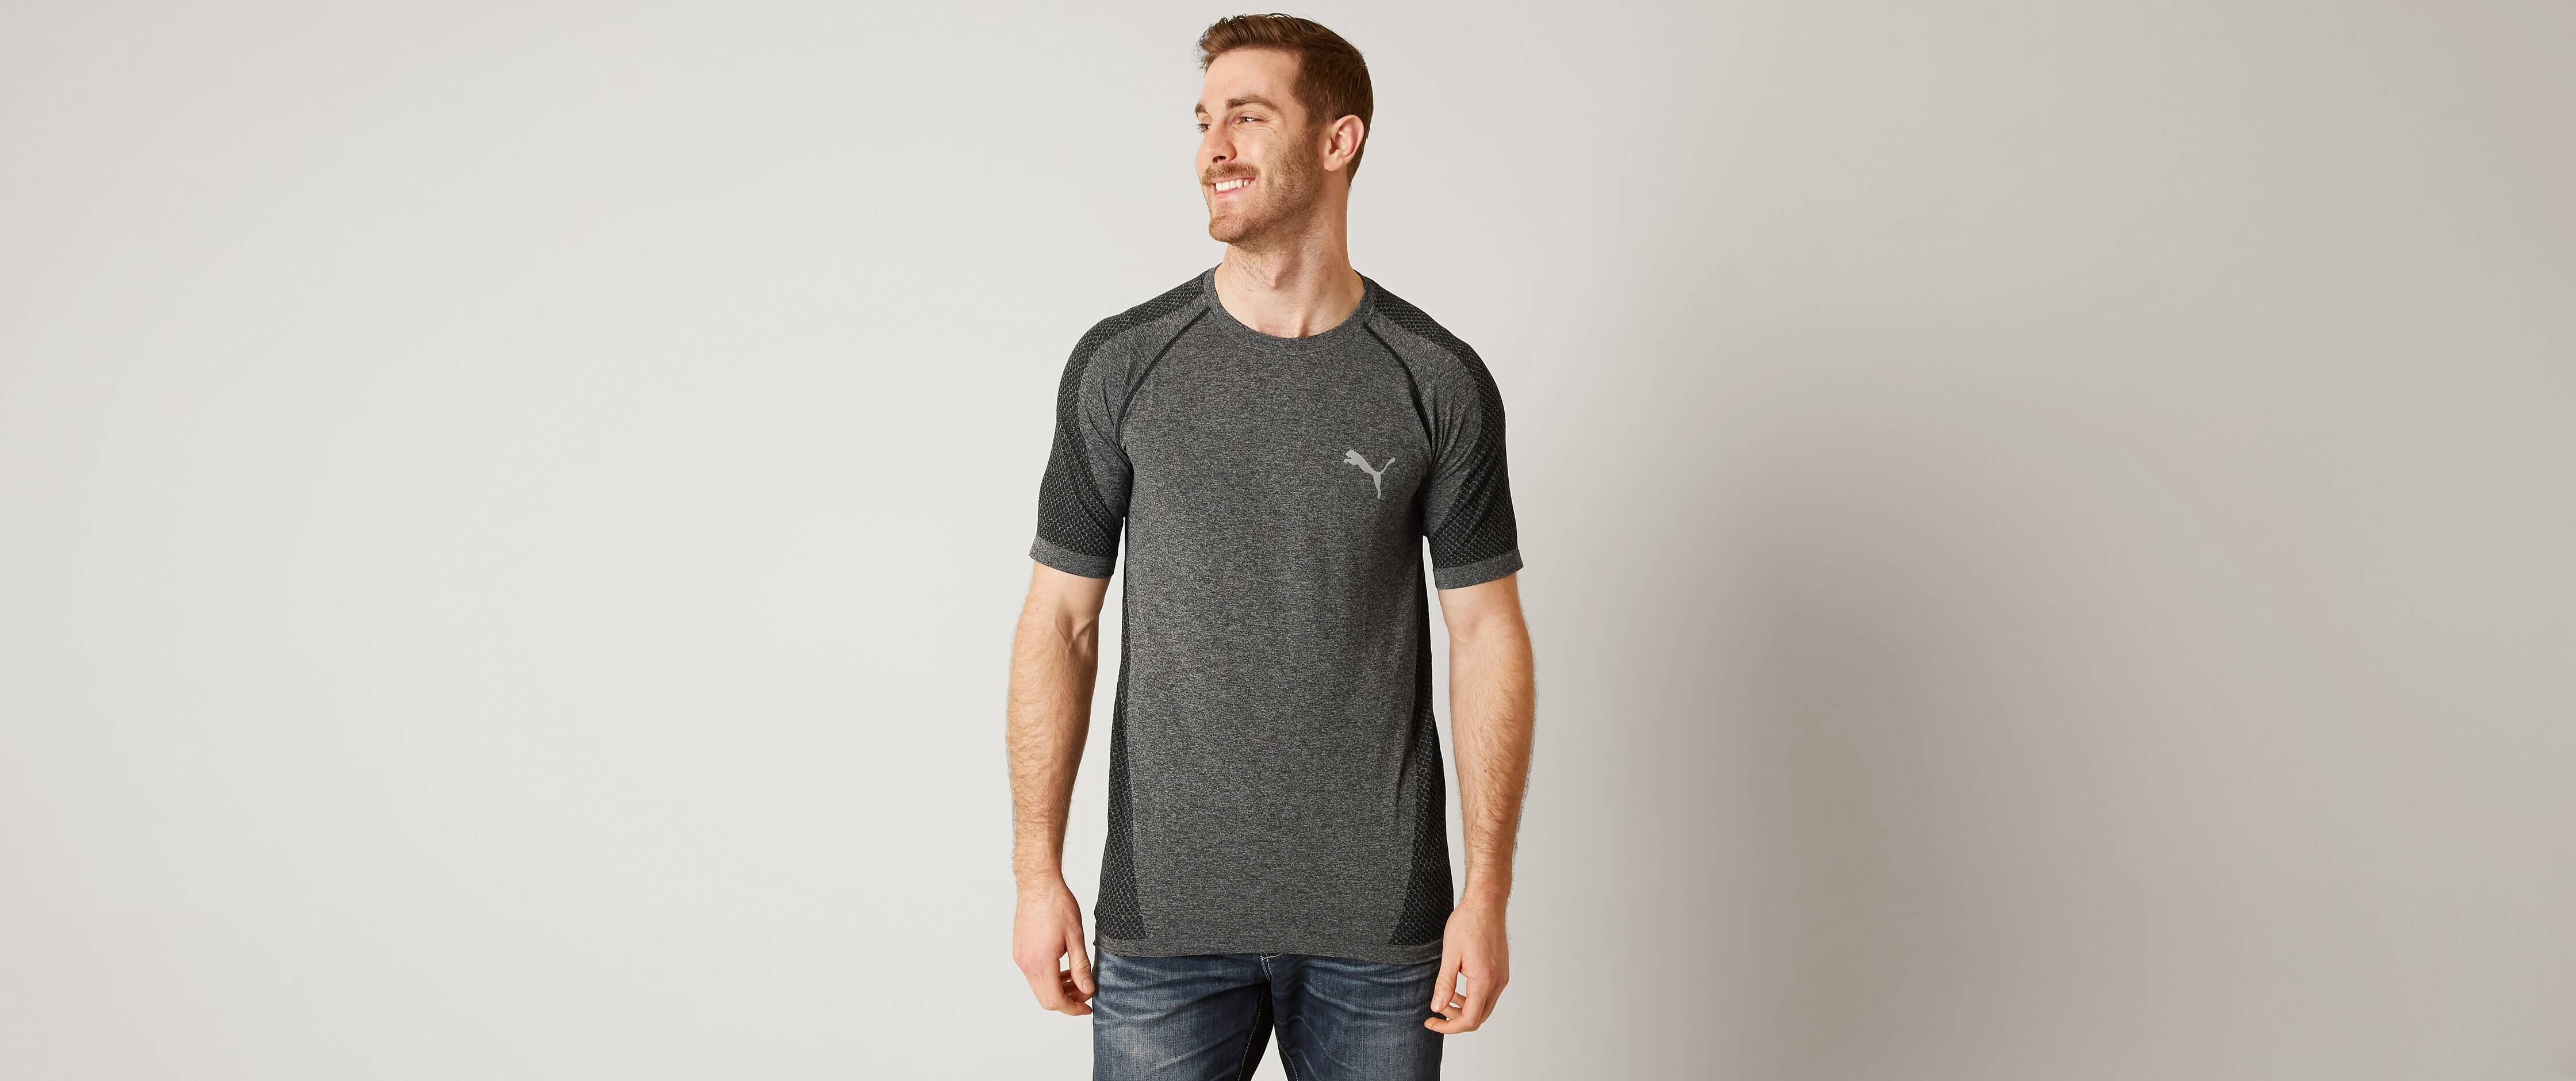 Puma evoKNIT Better T-shirt - Men's T 